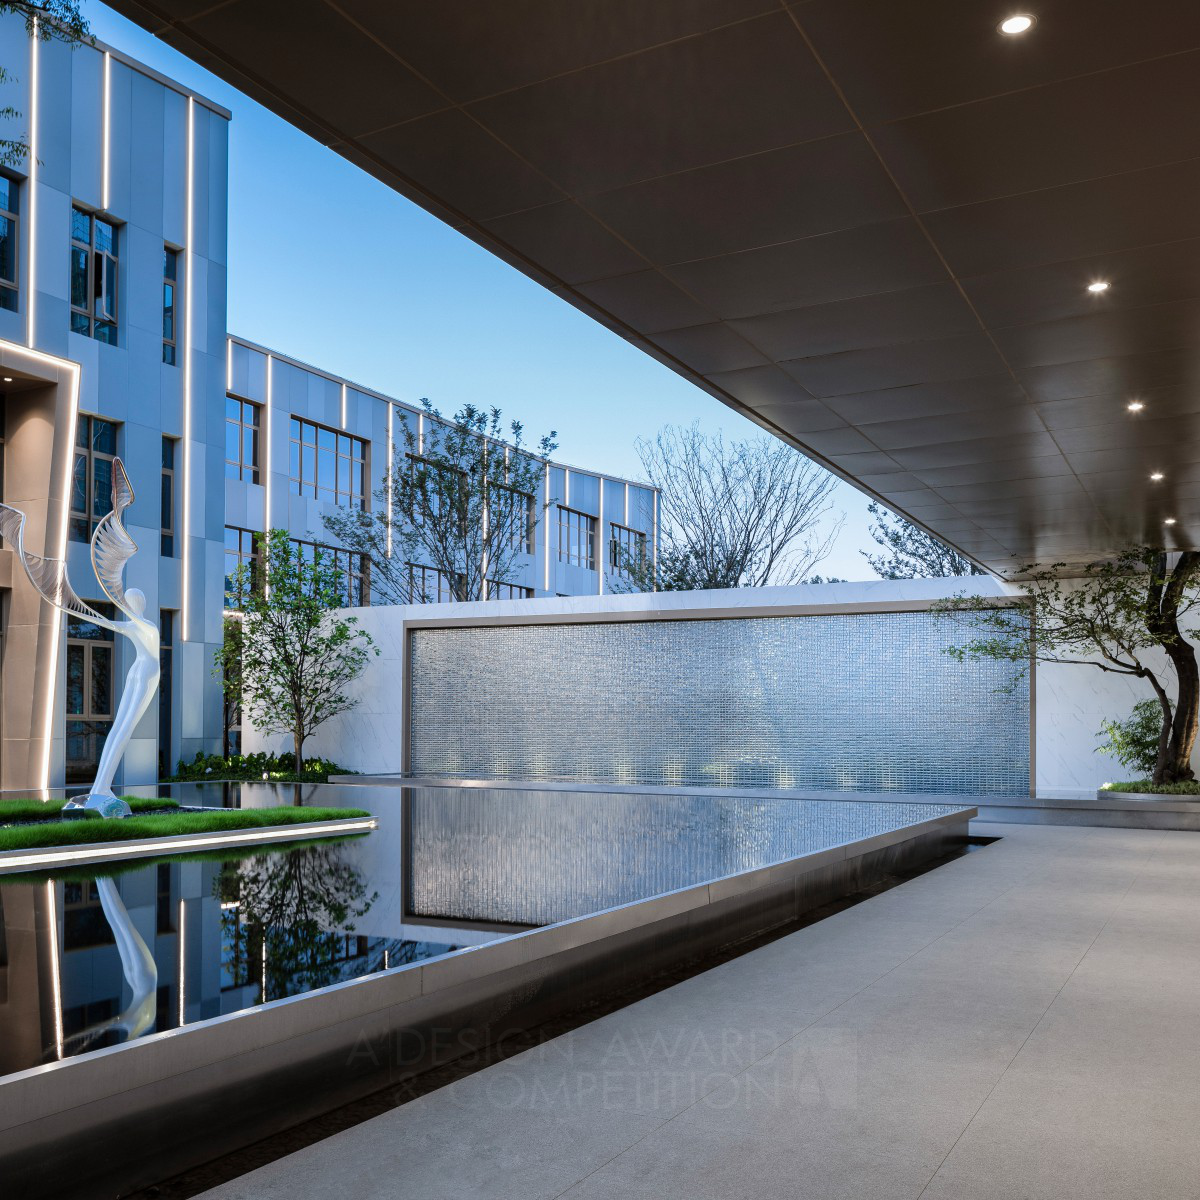 ARTBELL wins Silver at the prestigious A' Landscape Planning and Garden Design Award with Shinsun Majestic Mansion Landscape Design.